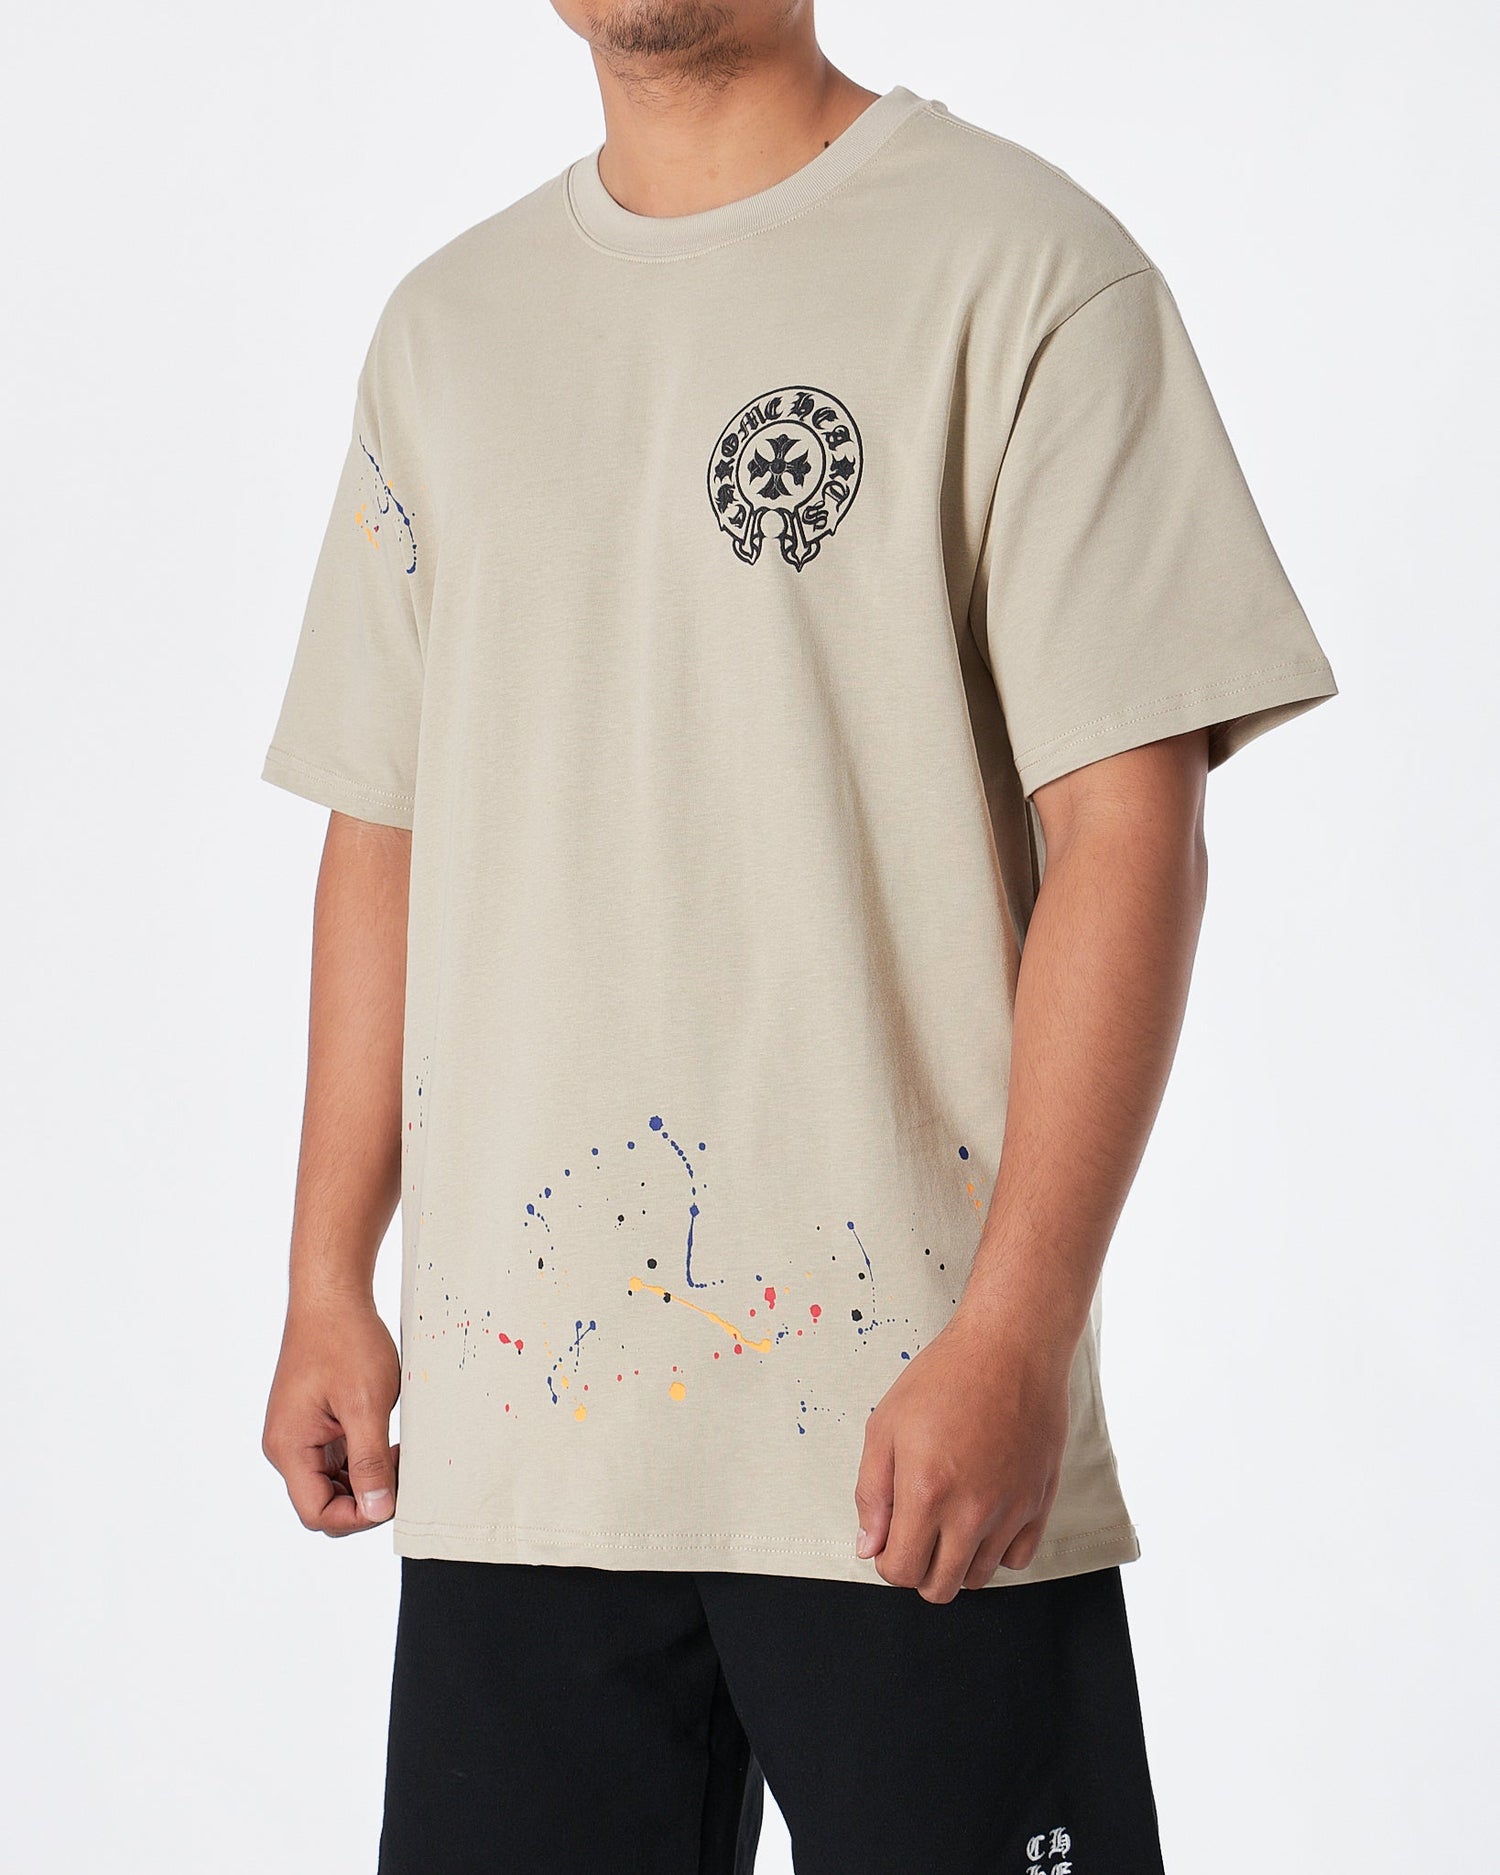 MOI OUTFIT-CH Ink Splash Men Cream T-Shirt 24.90